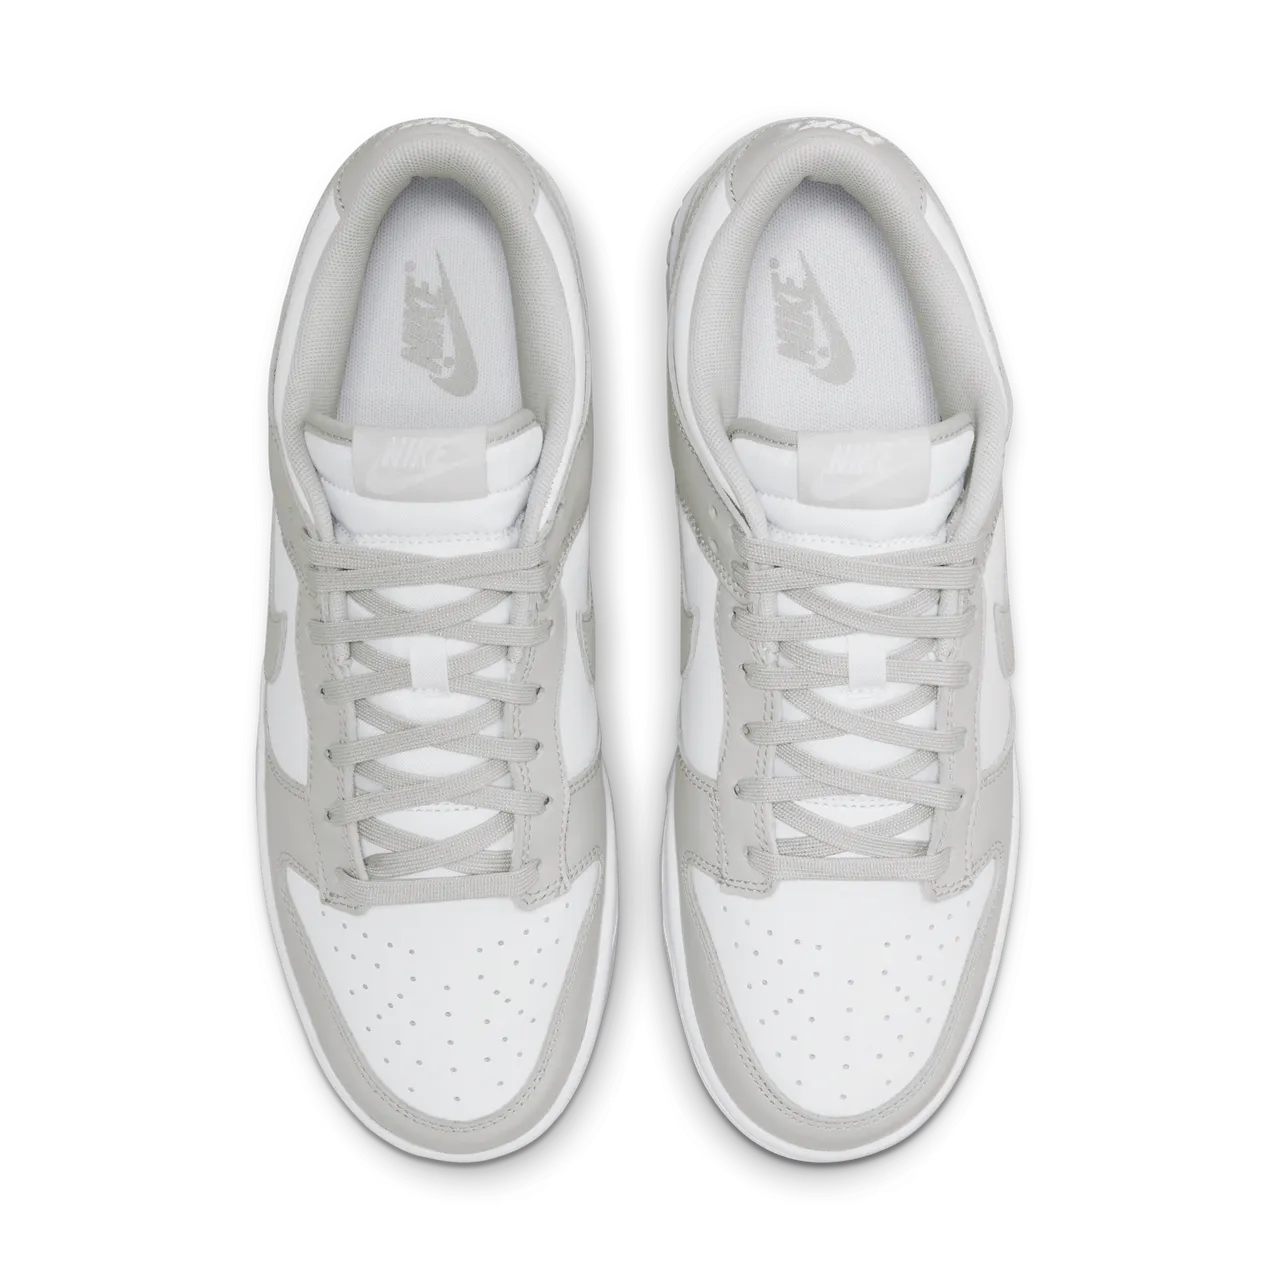 Nike Dunk Low Retro Men's Shoe - White - Leather